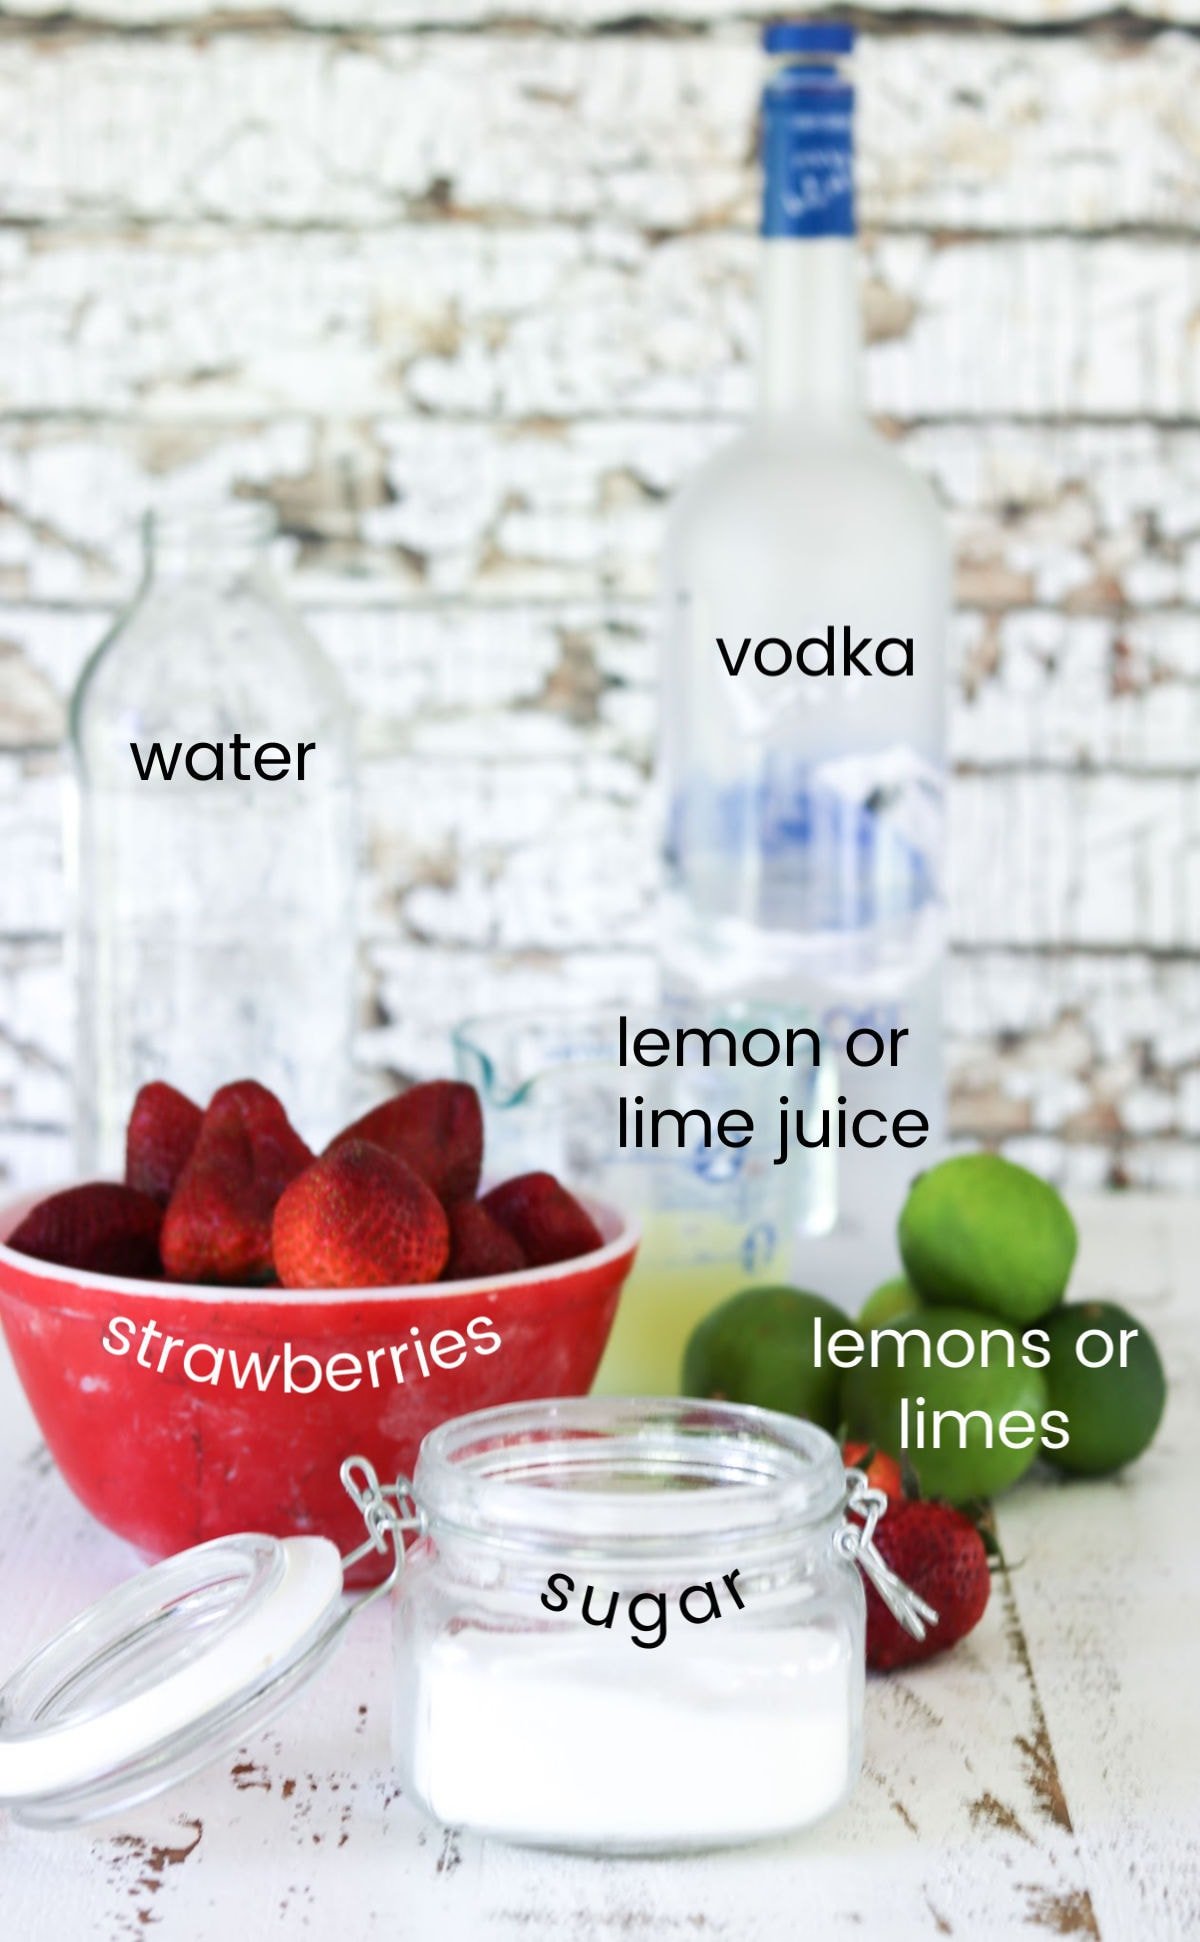 Ingredients for strawberry vodka lemonade.